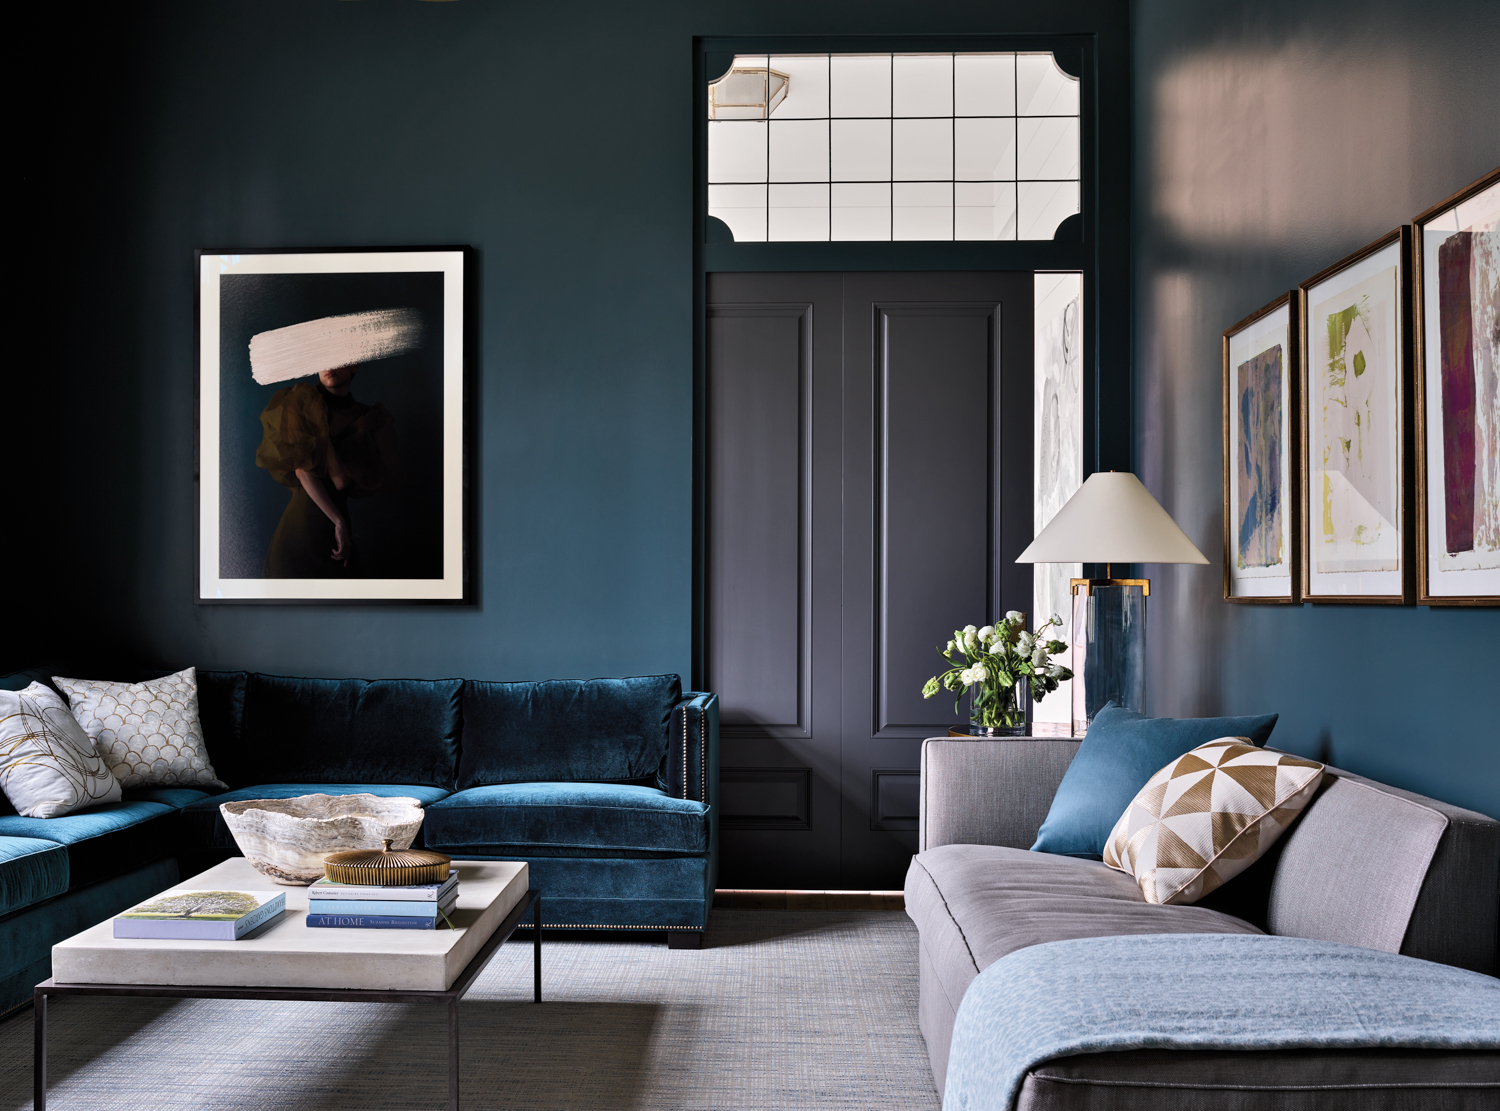 Family room with abstract artwork, velvet blue sofa, gray chaise, white table lamp and slate pocket door